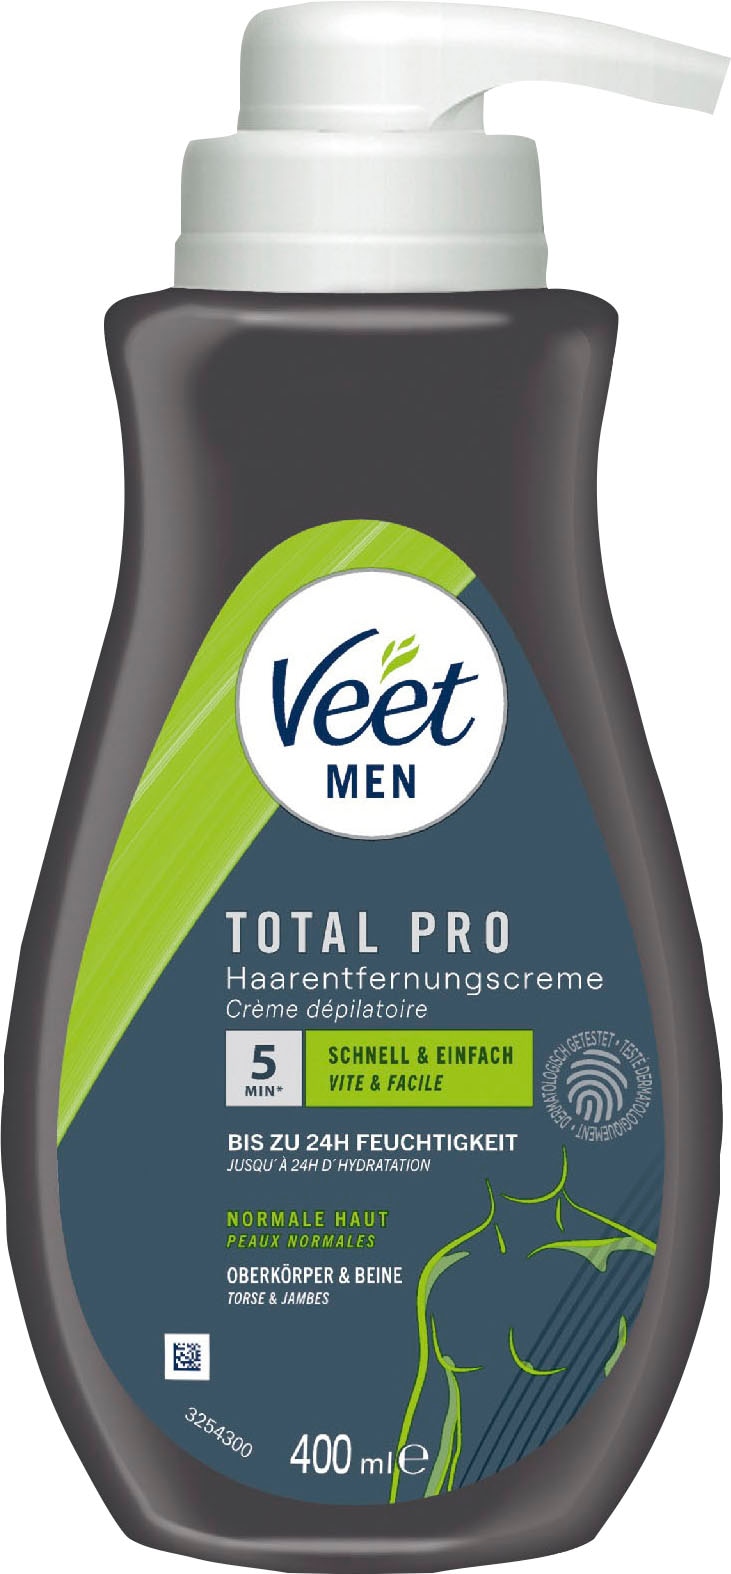 »for Men Online im Haut« Shop Enthaarungscreme Veet OTTO Sensible -